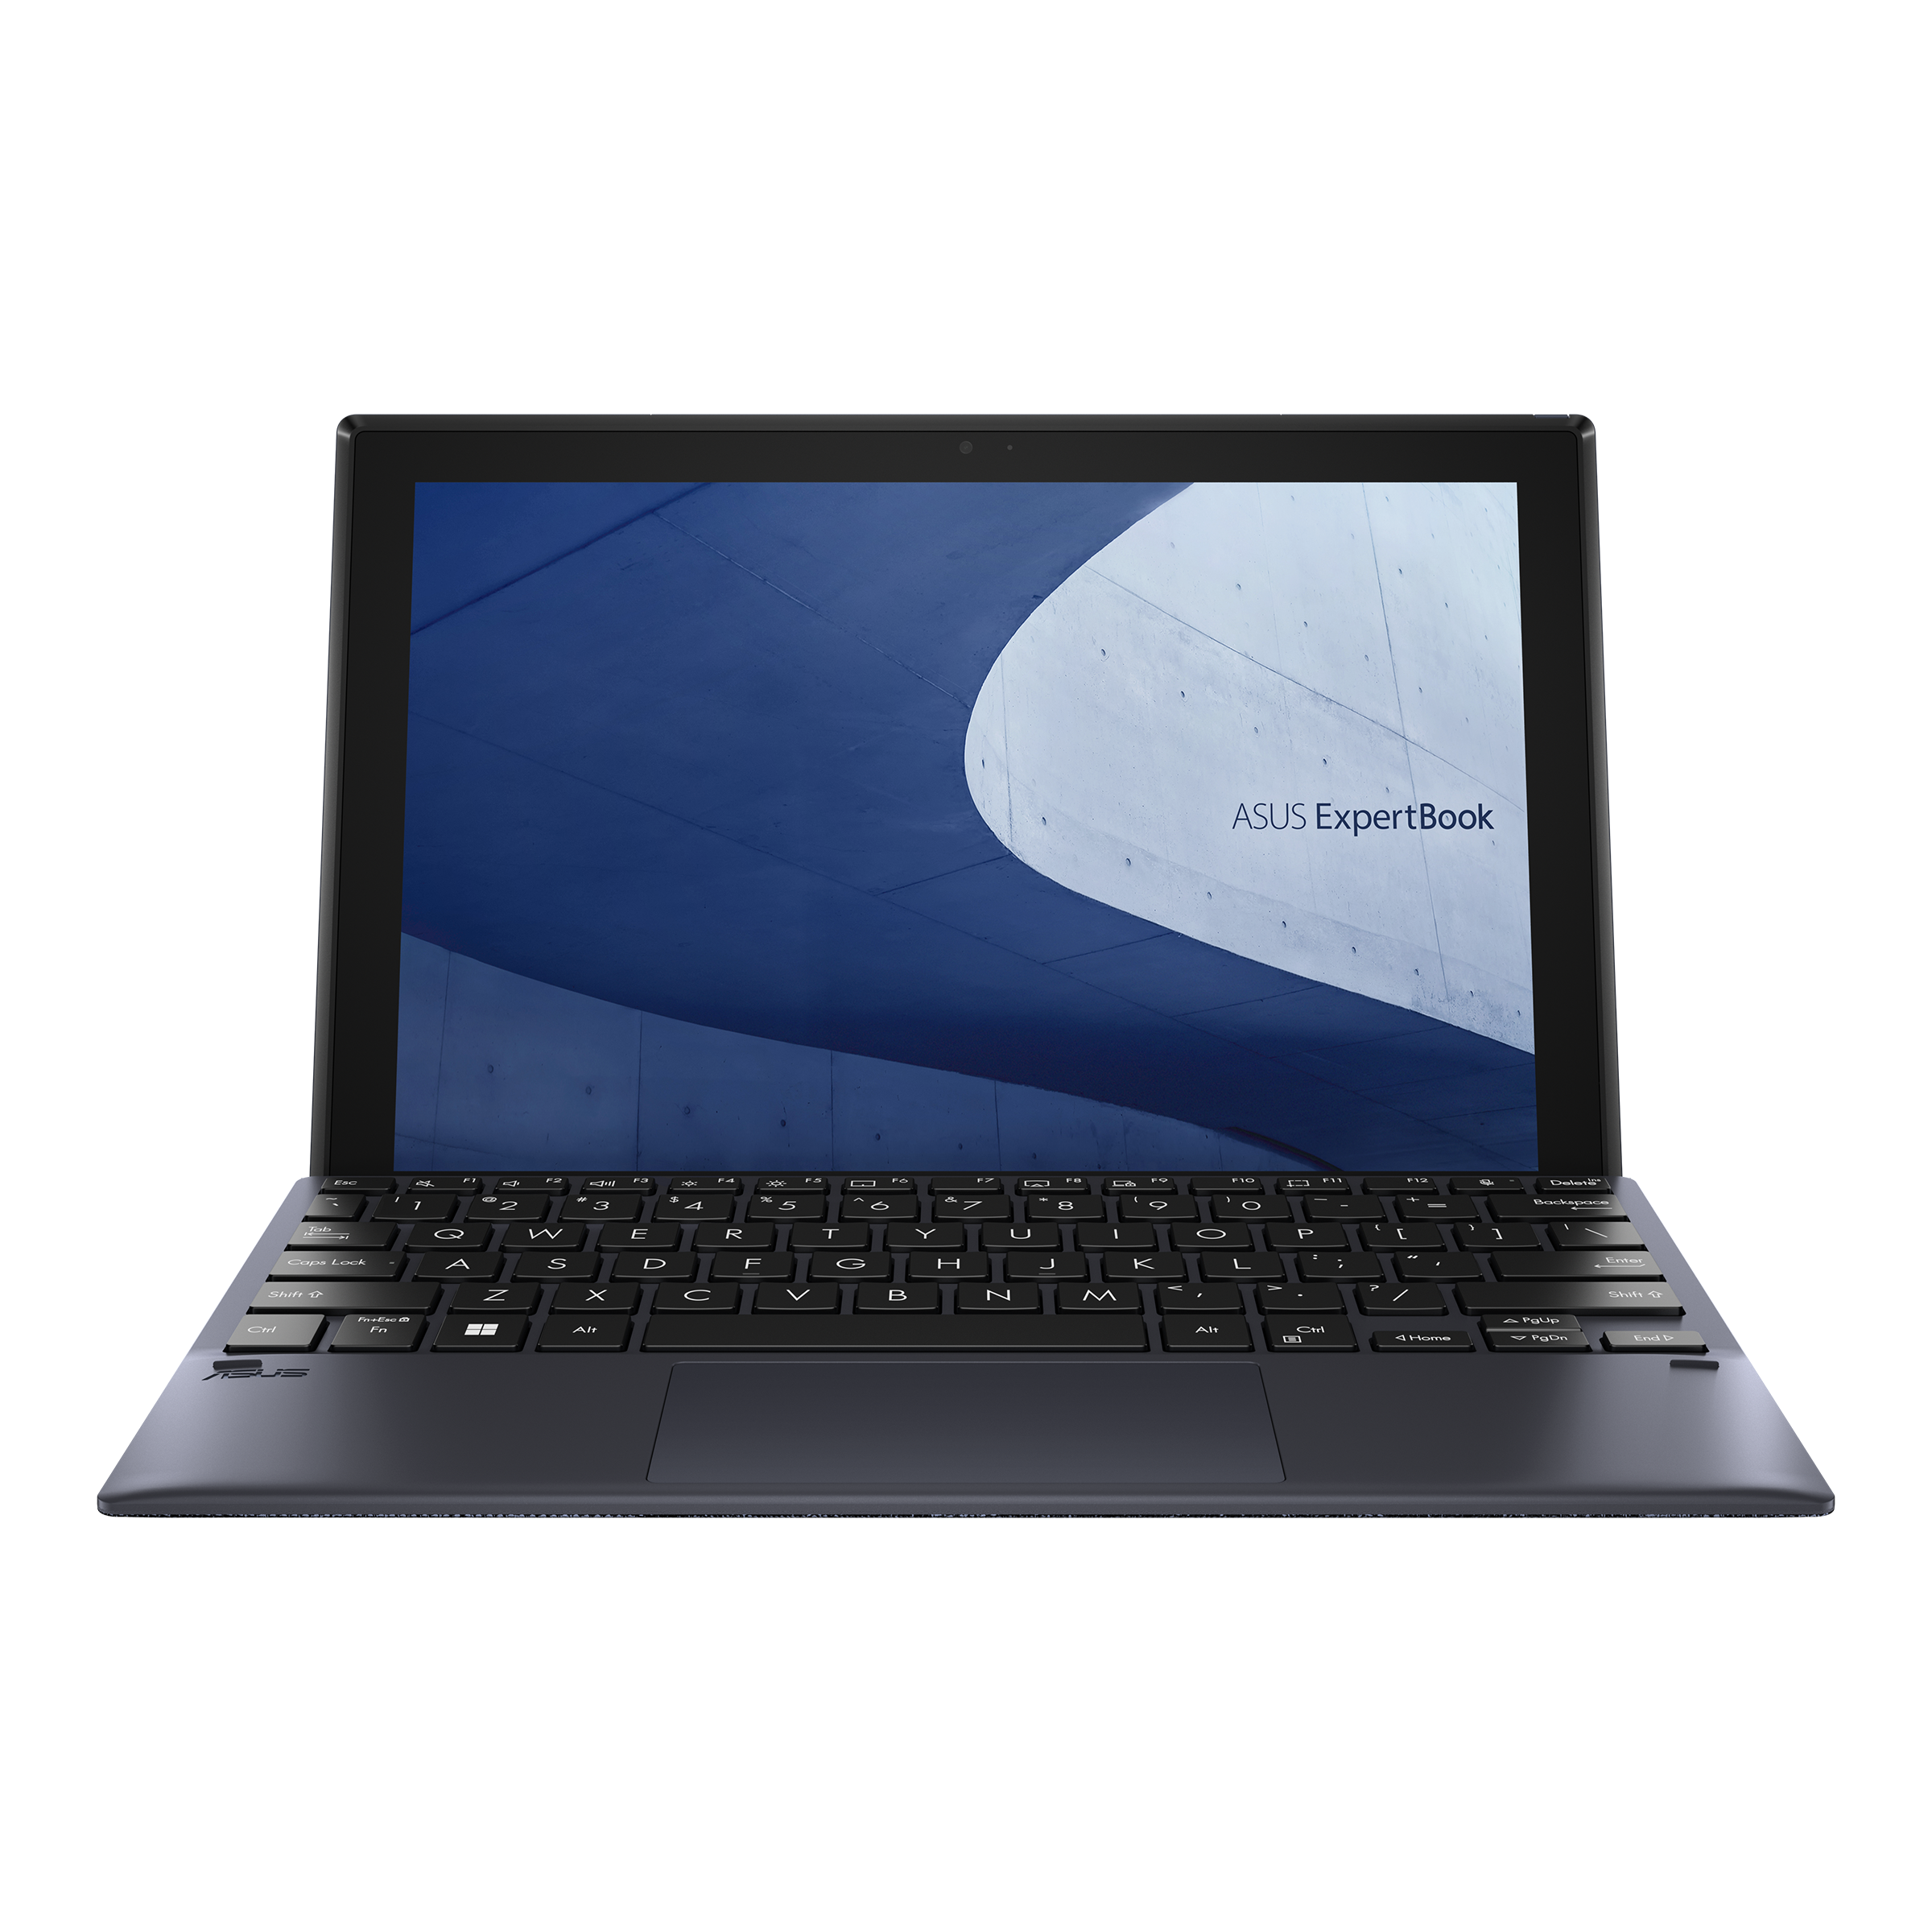 Asus ExpertBook Detachable B3000DQ1A-HT0110M